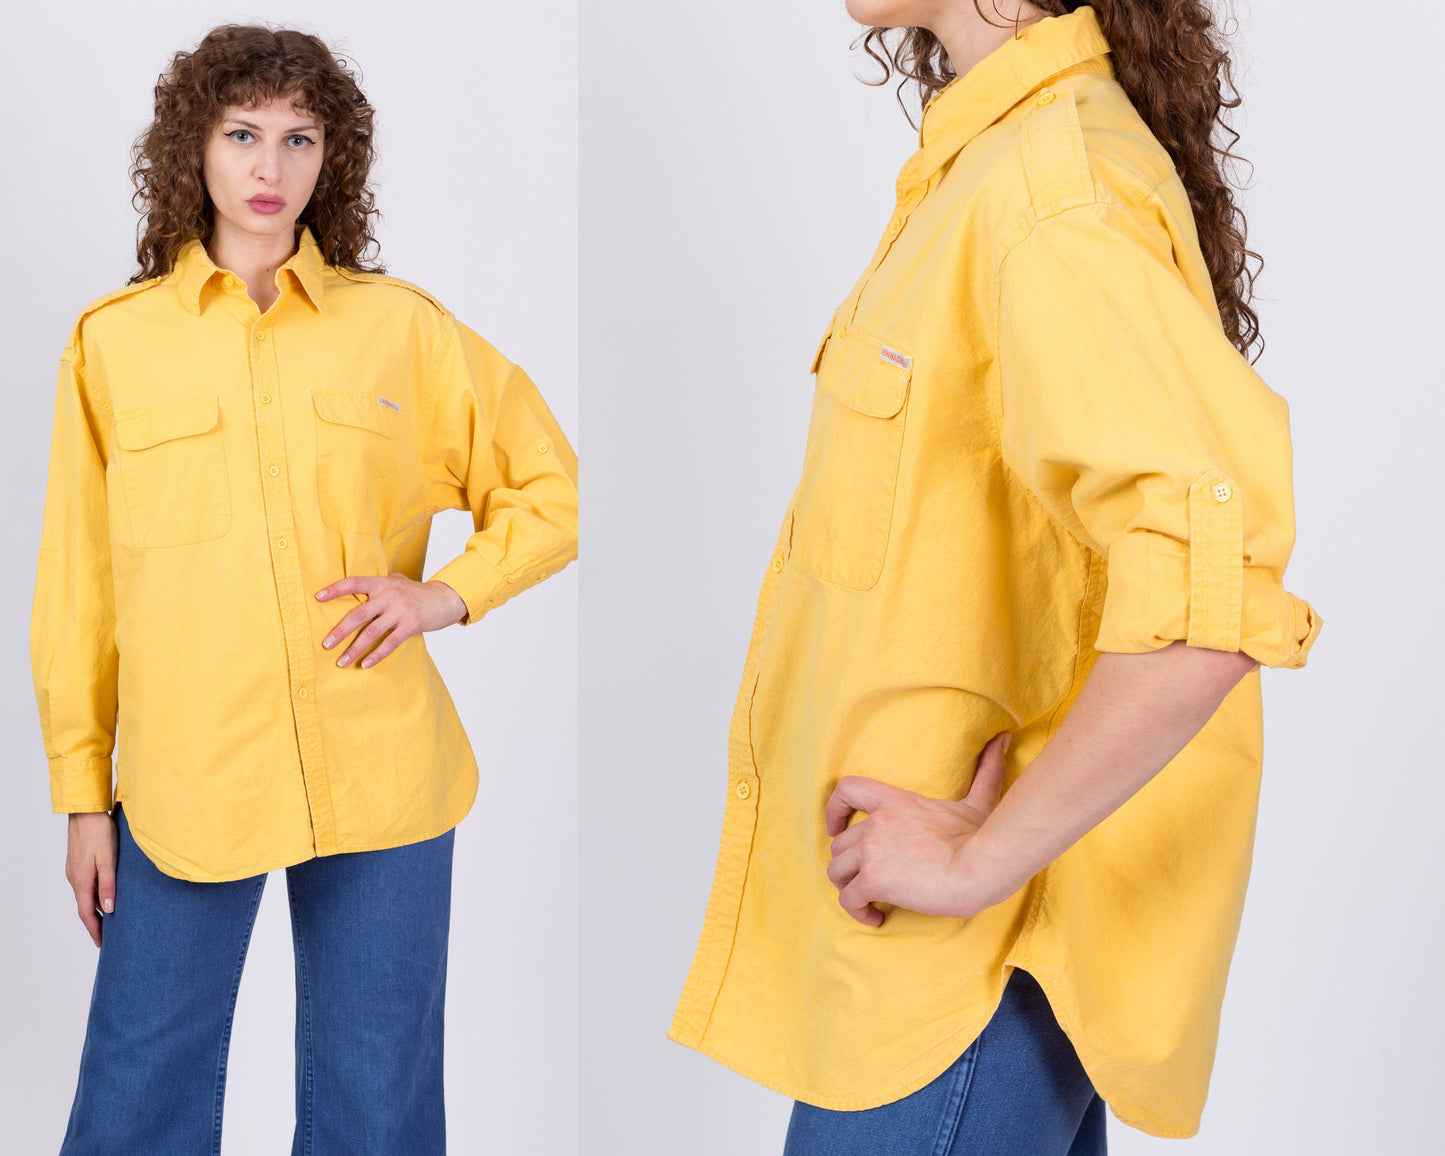 Vintage Yellow Safari Shirt - One Size 